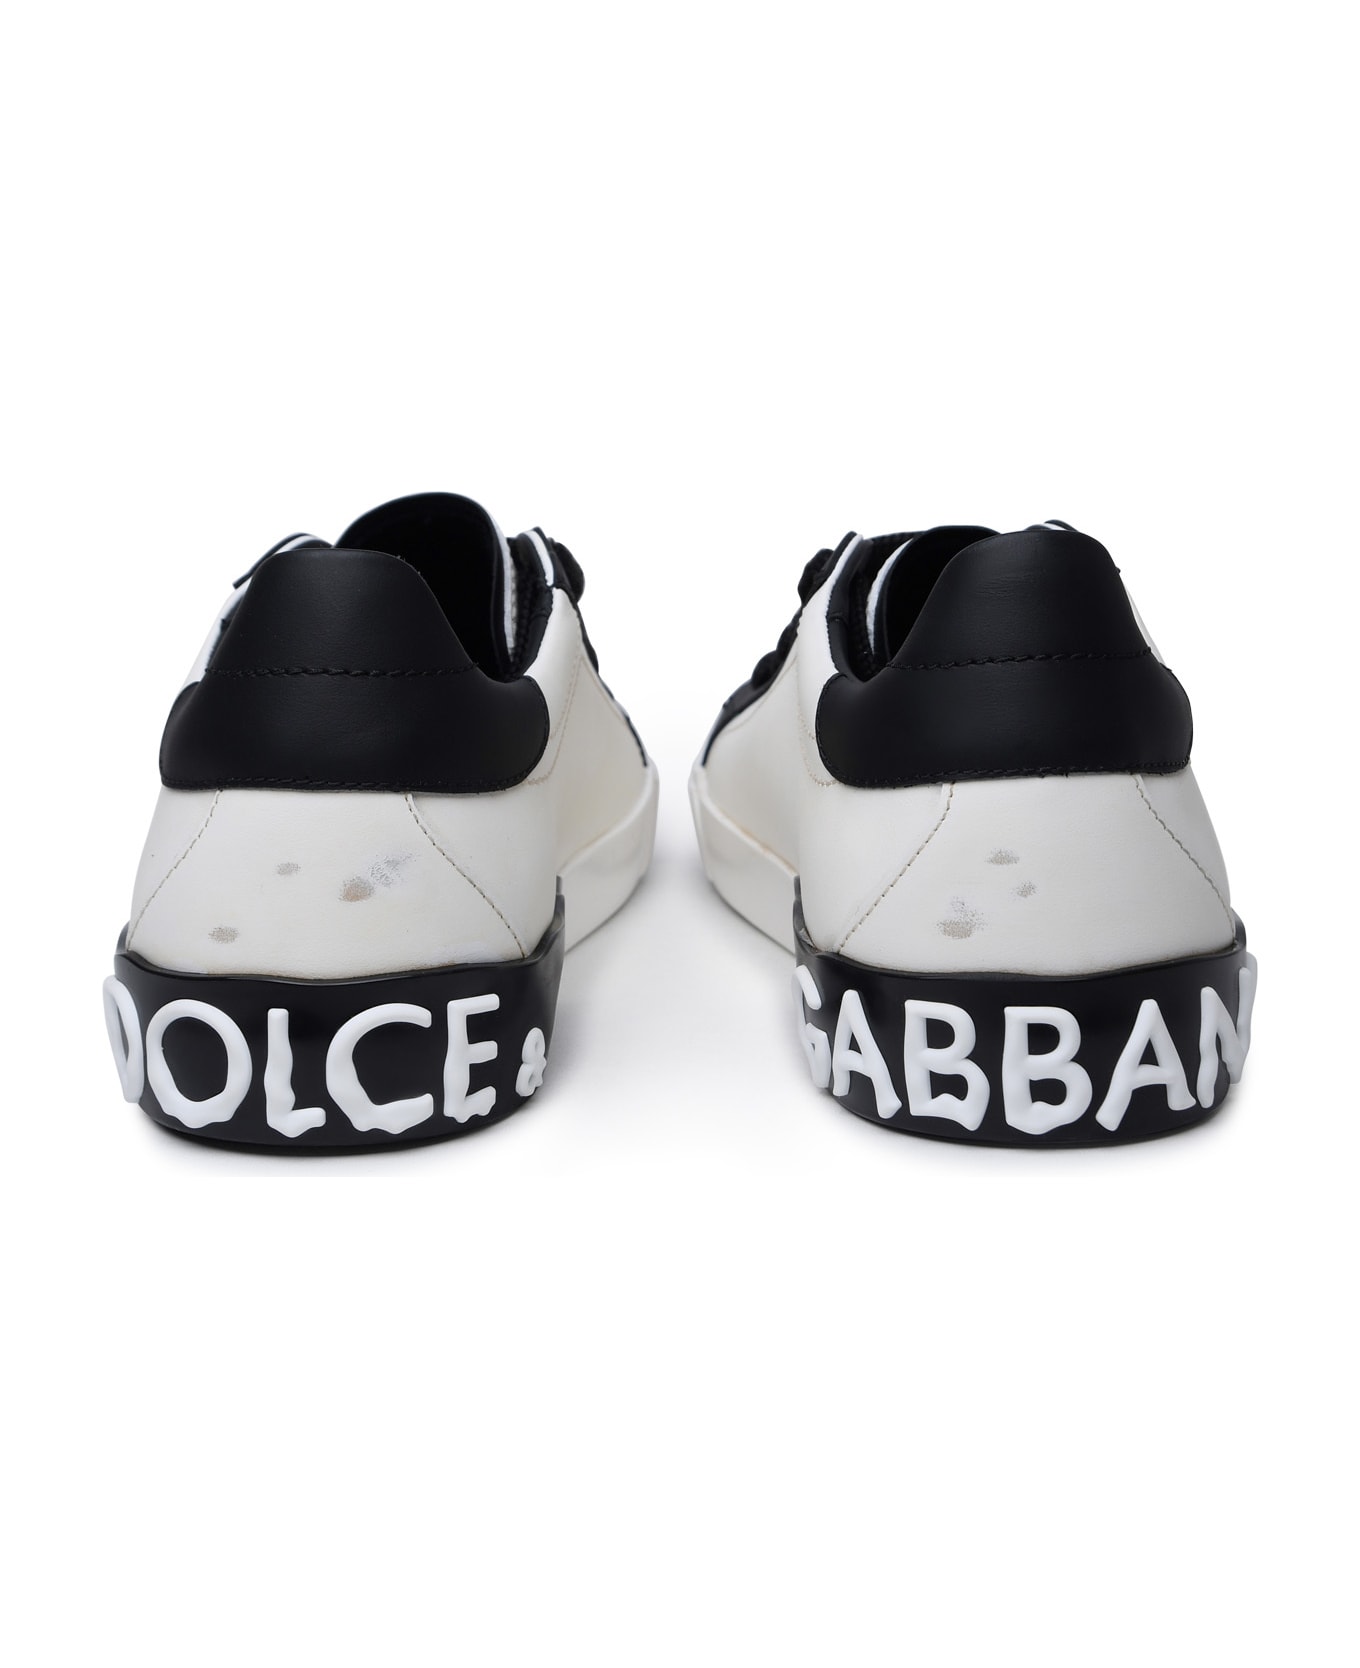 Dolce & Gabbana Portofino Vintage Leather Sneaker - white/black